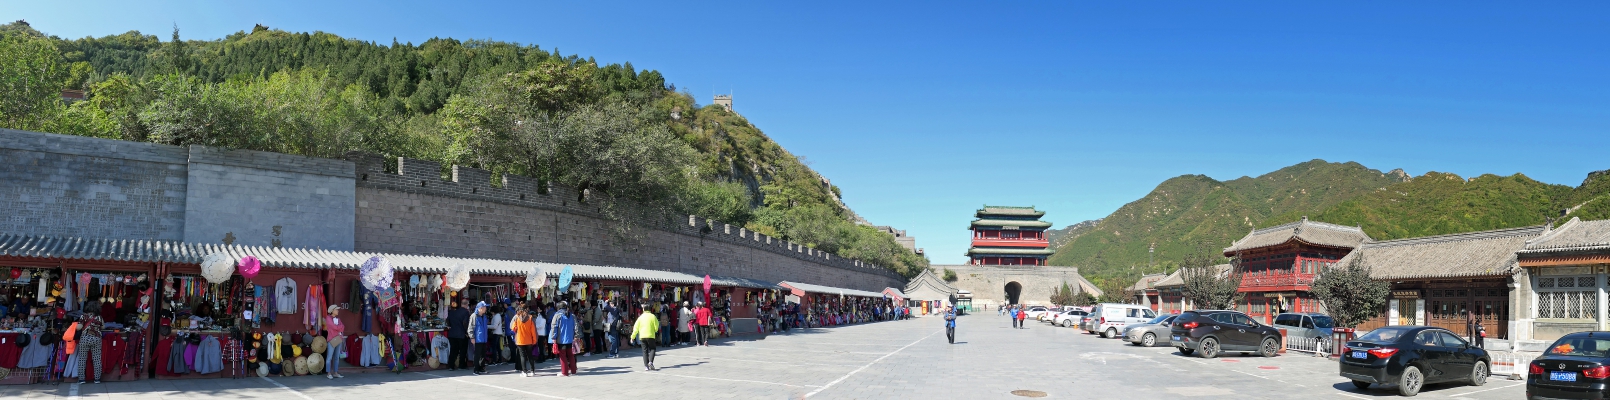 Great Wall Tourist Entrance.jpg